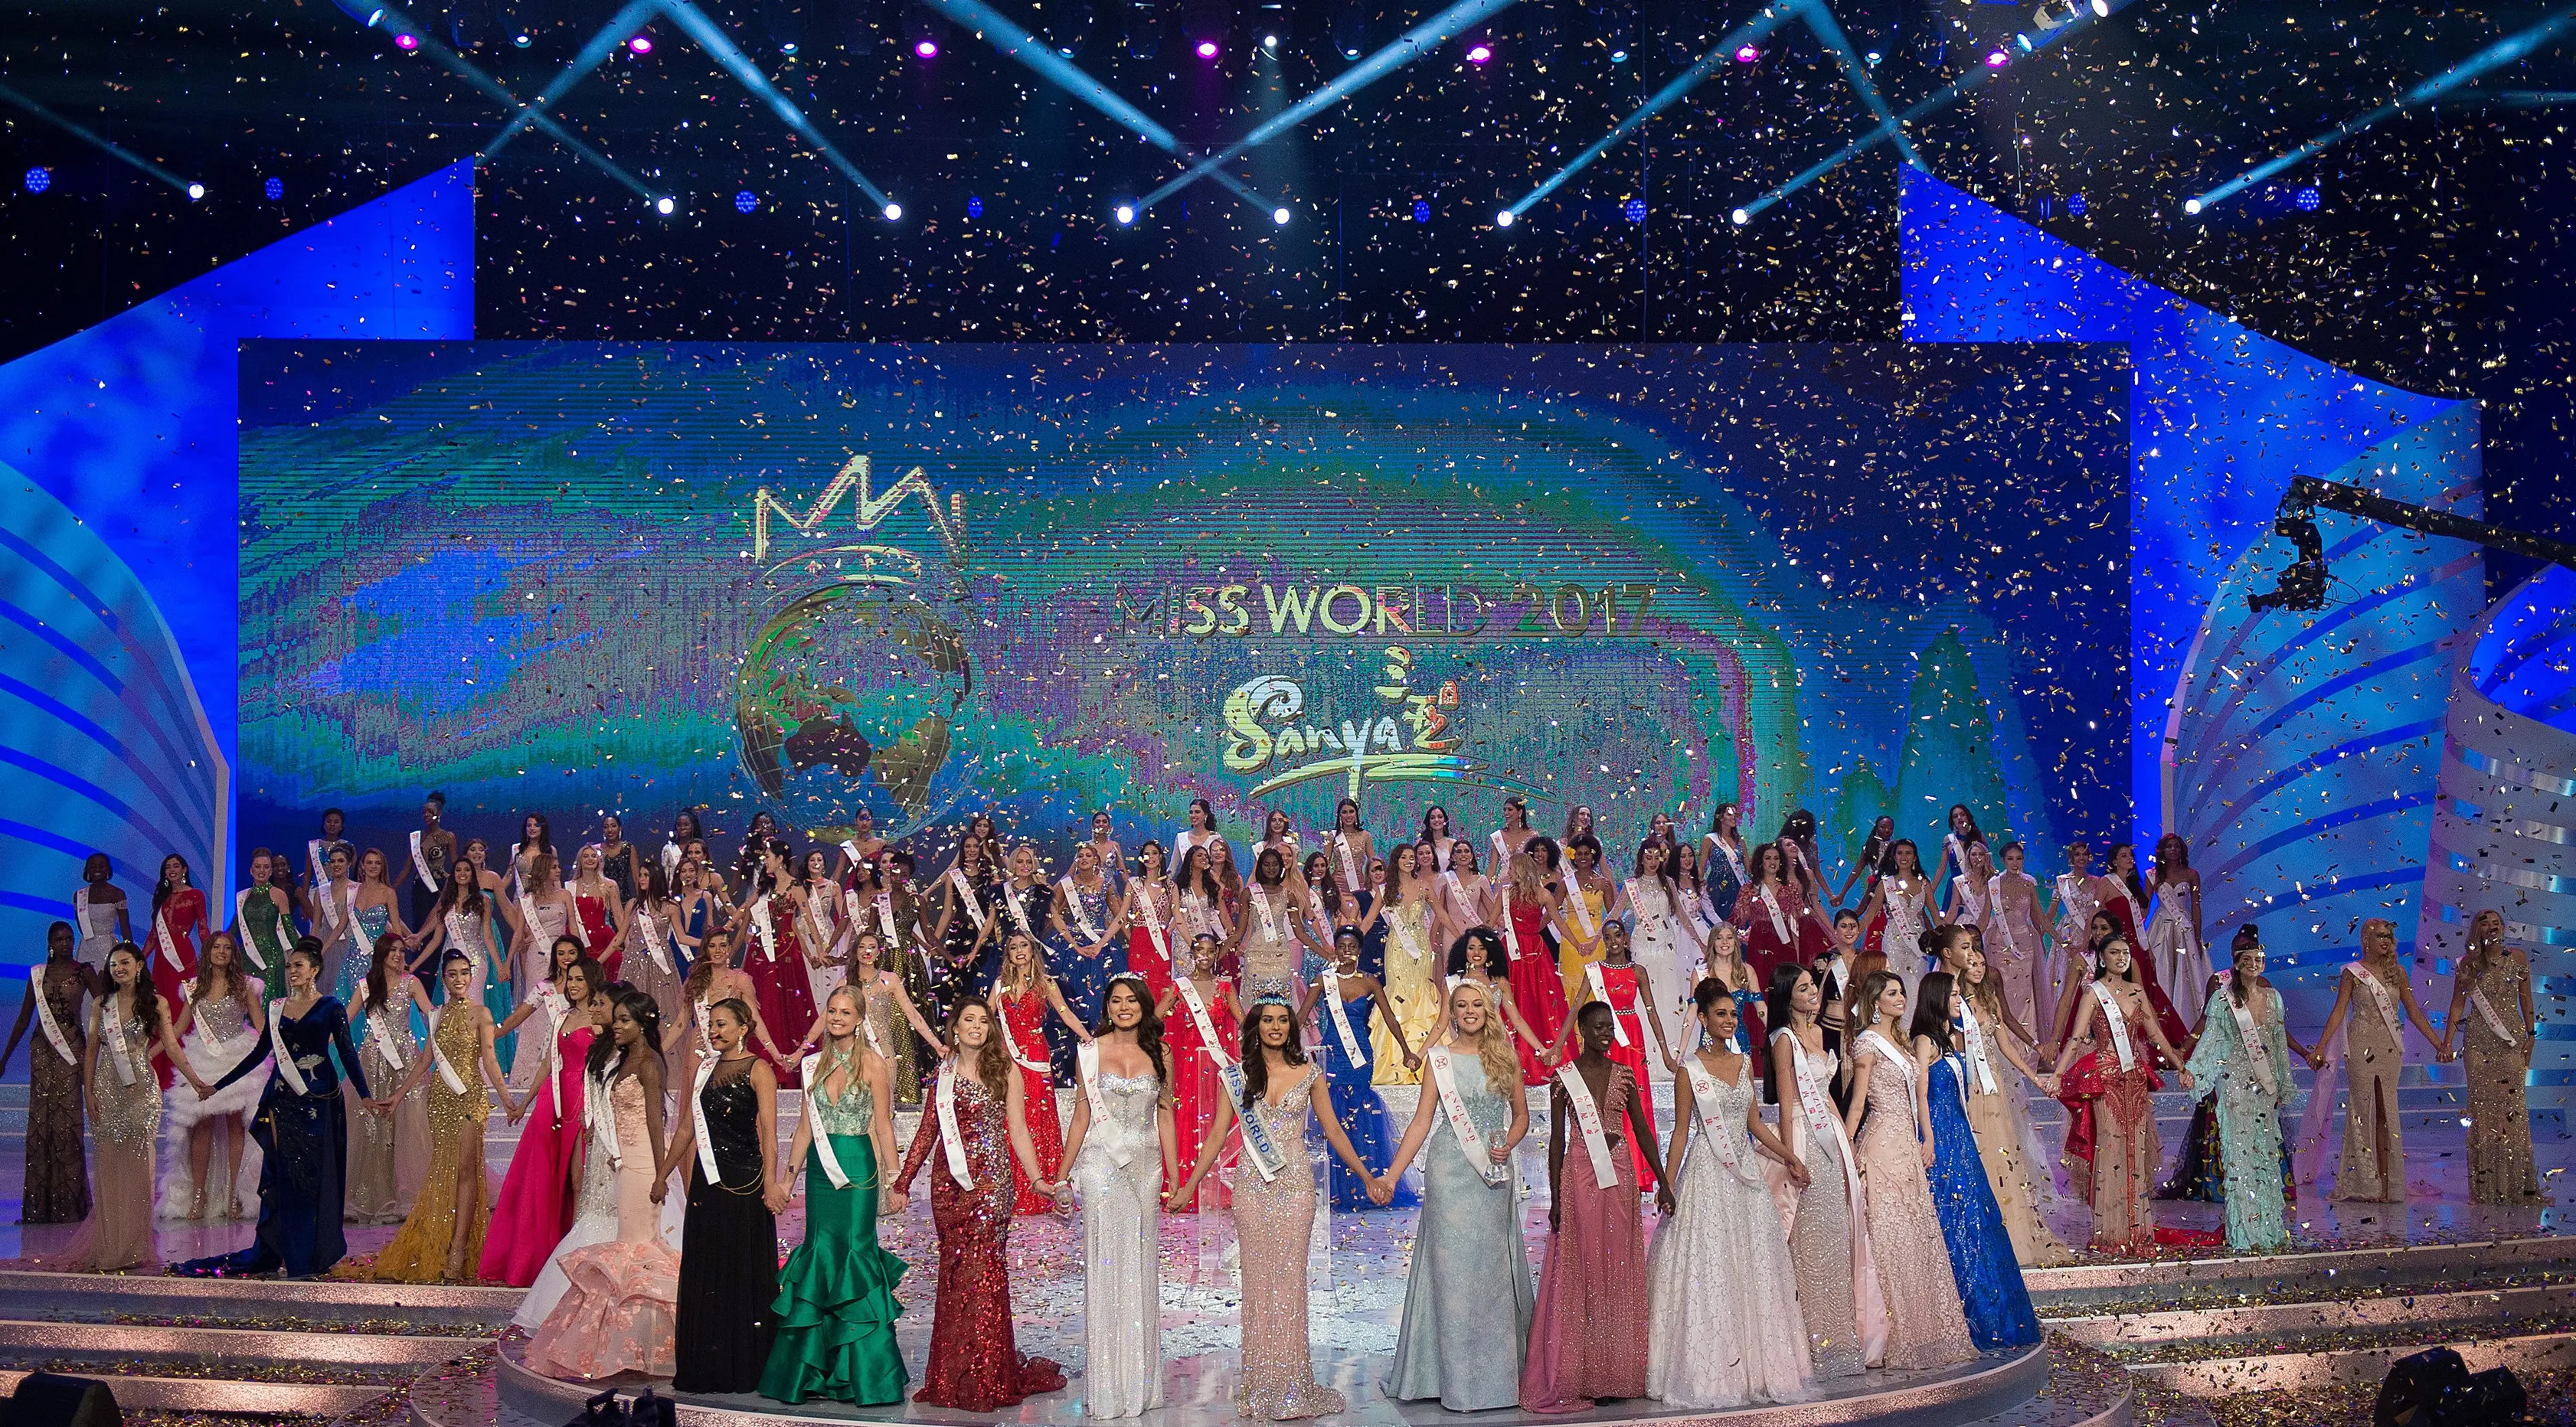 Kontestan ajang Miss World berpose seusai malam anugerah Miss World ke-67 di Sanya, Tiongkok, Sabtu (18/11). Mahasiswa kedokteran asal India, Manushi Chhillar (20 tahun) dinobatkan sebagai Miss World 2017. (NICOLAS ASFOURI/AFP)